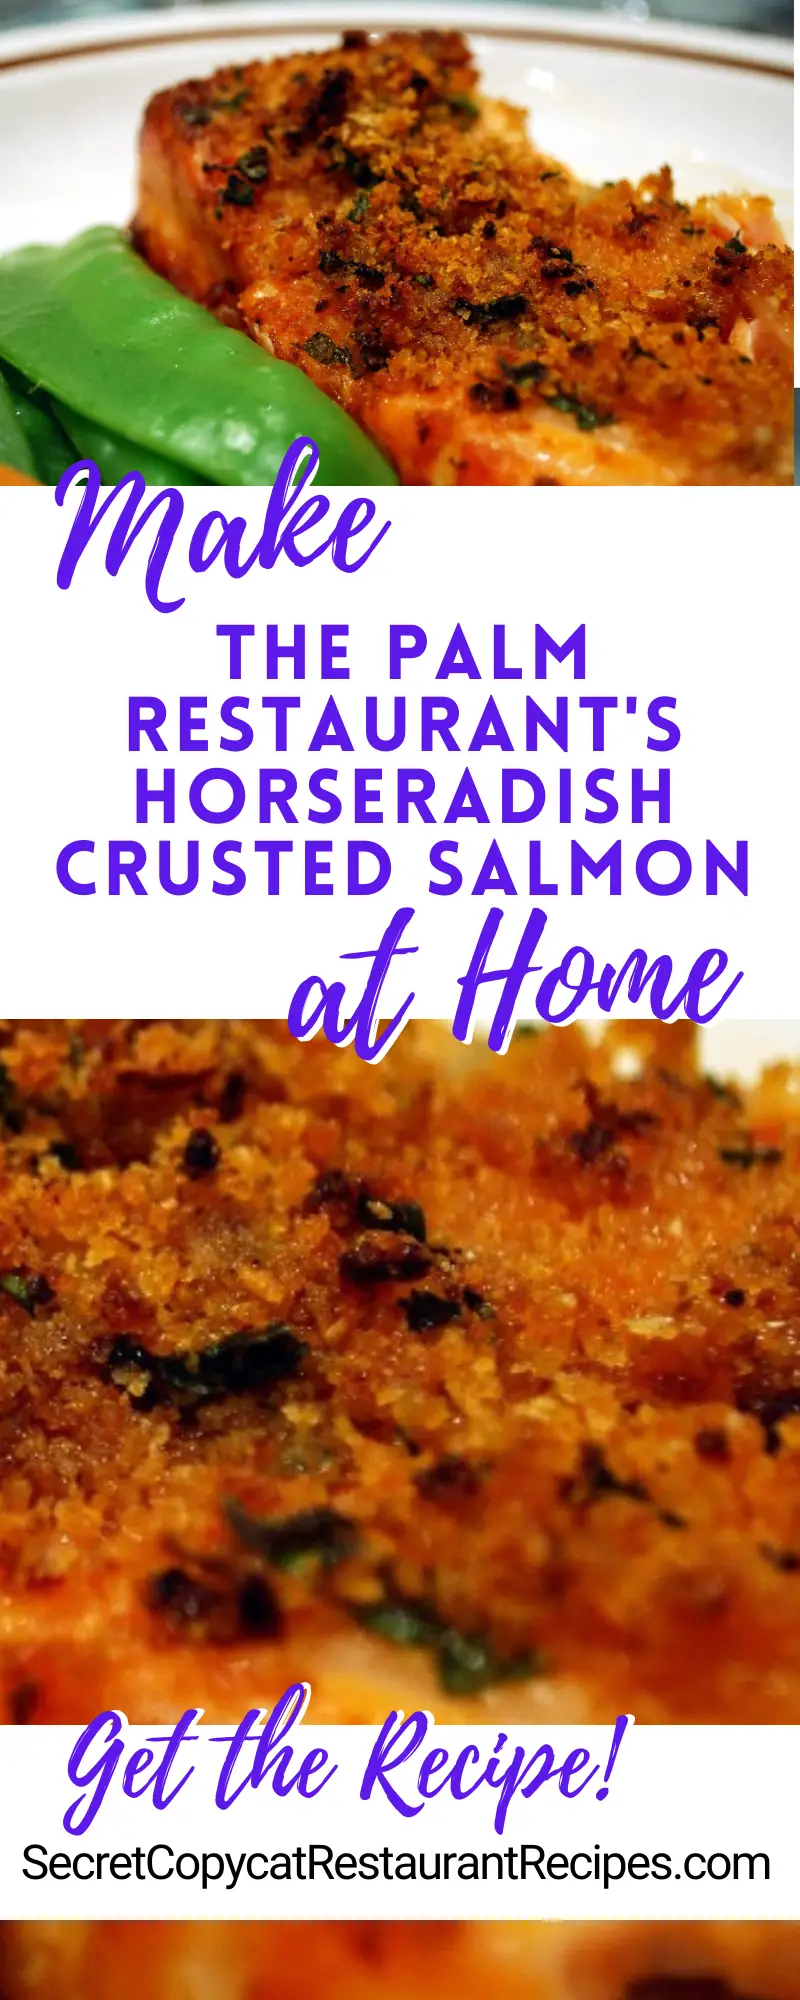 The Palm Restaurant Horseradish Crusted Salmon Recipe